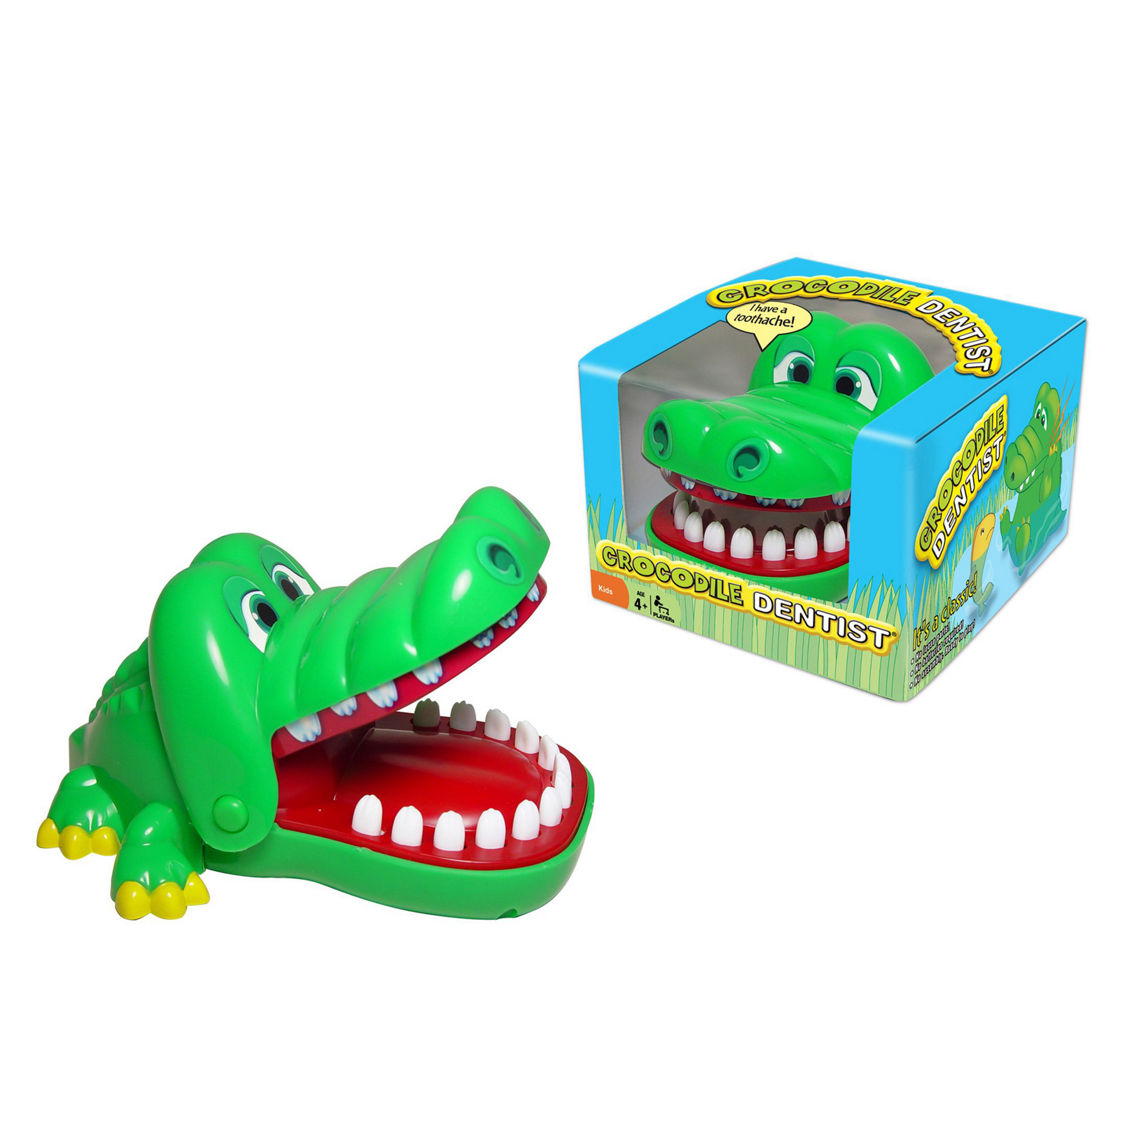 Winning Moves Crocodile Dentist - Image 2 of 3